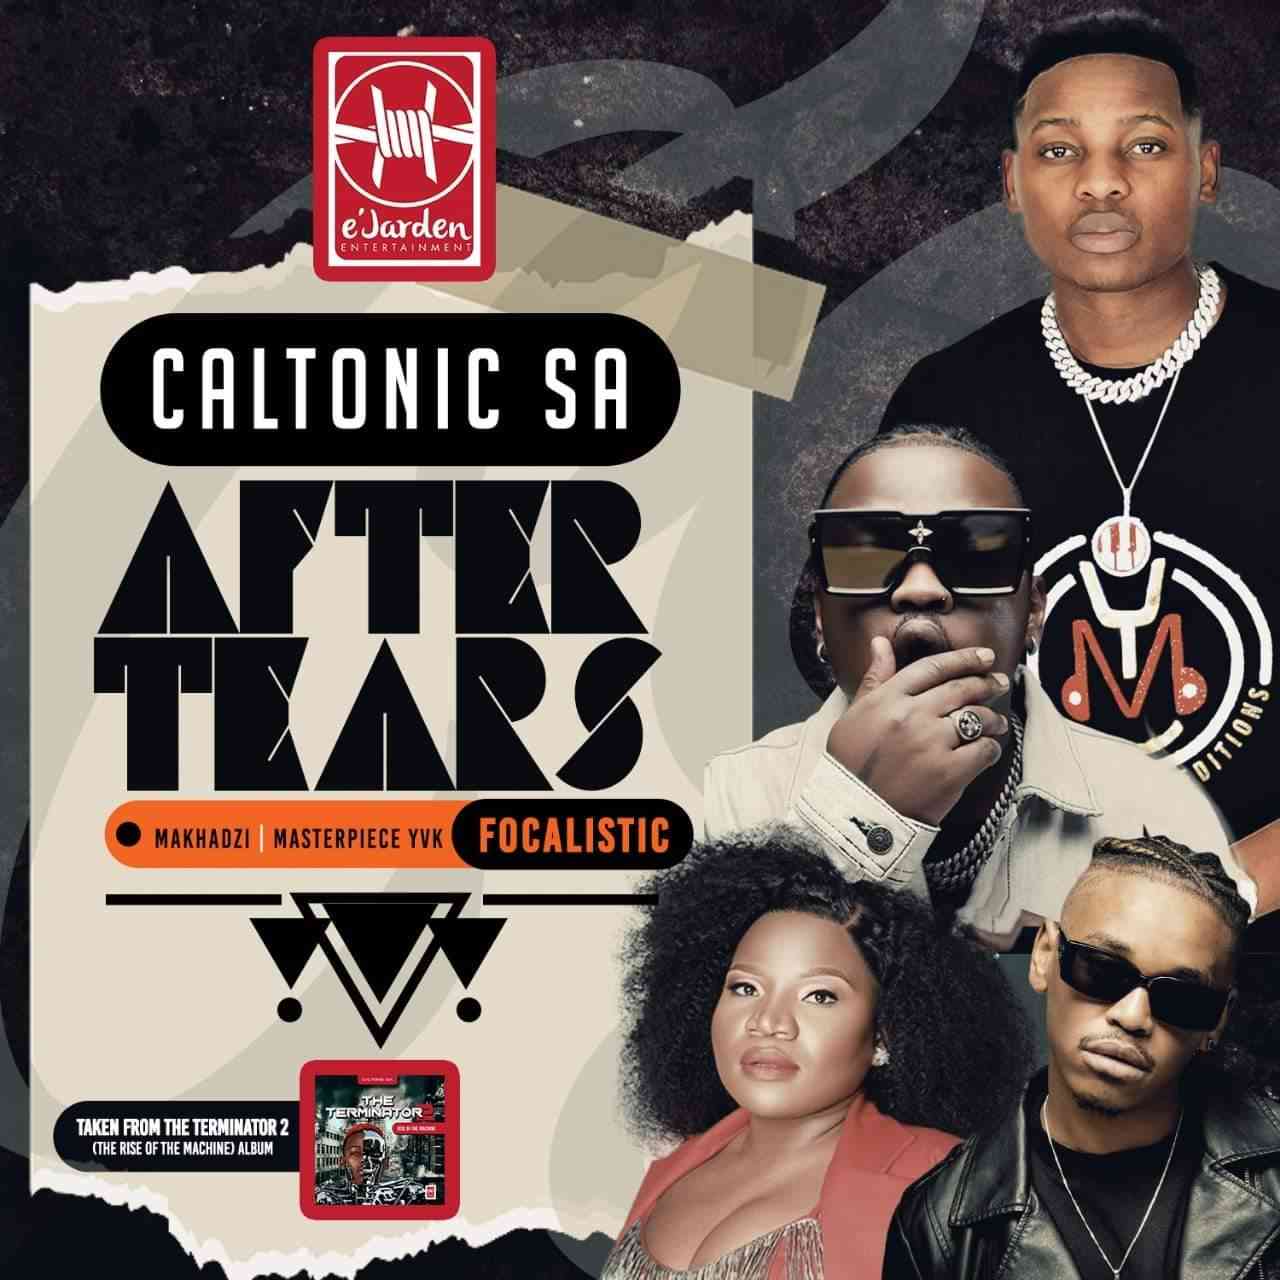 Caltonic SA - After Tears ft. Focalistic, Masterpiece YVK & Makhadzi